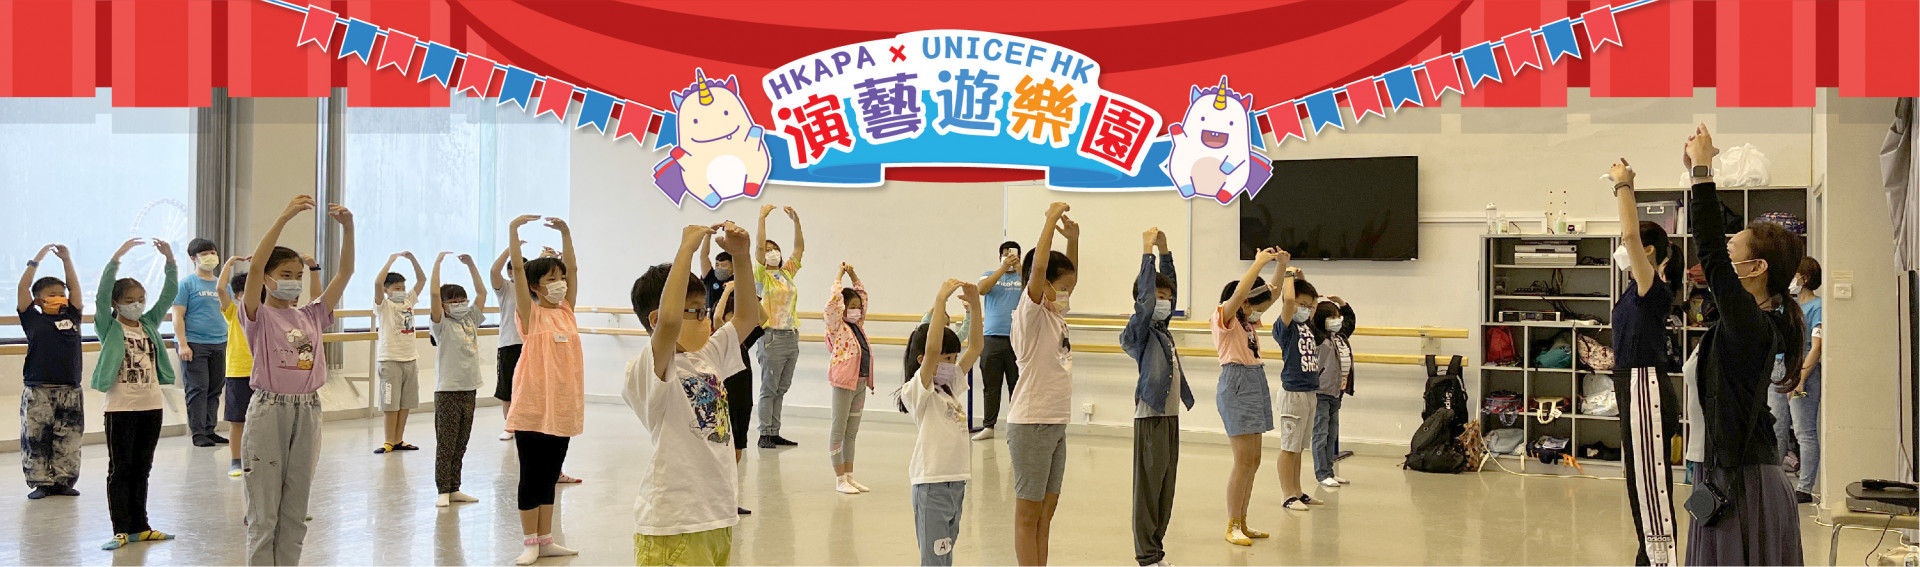 Merry Go Around HKAPA x UNICEF HK